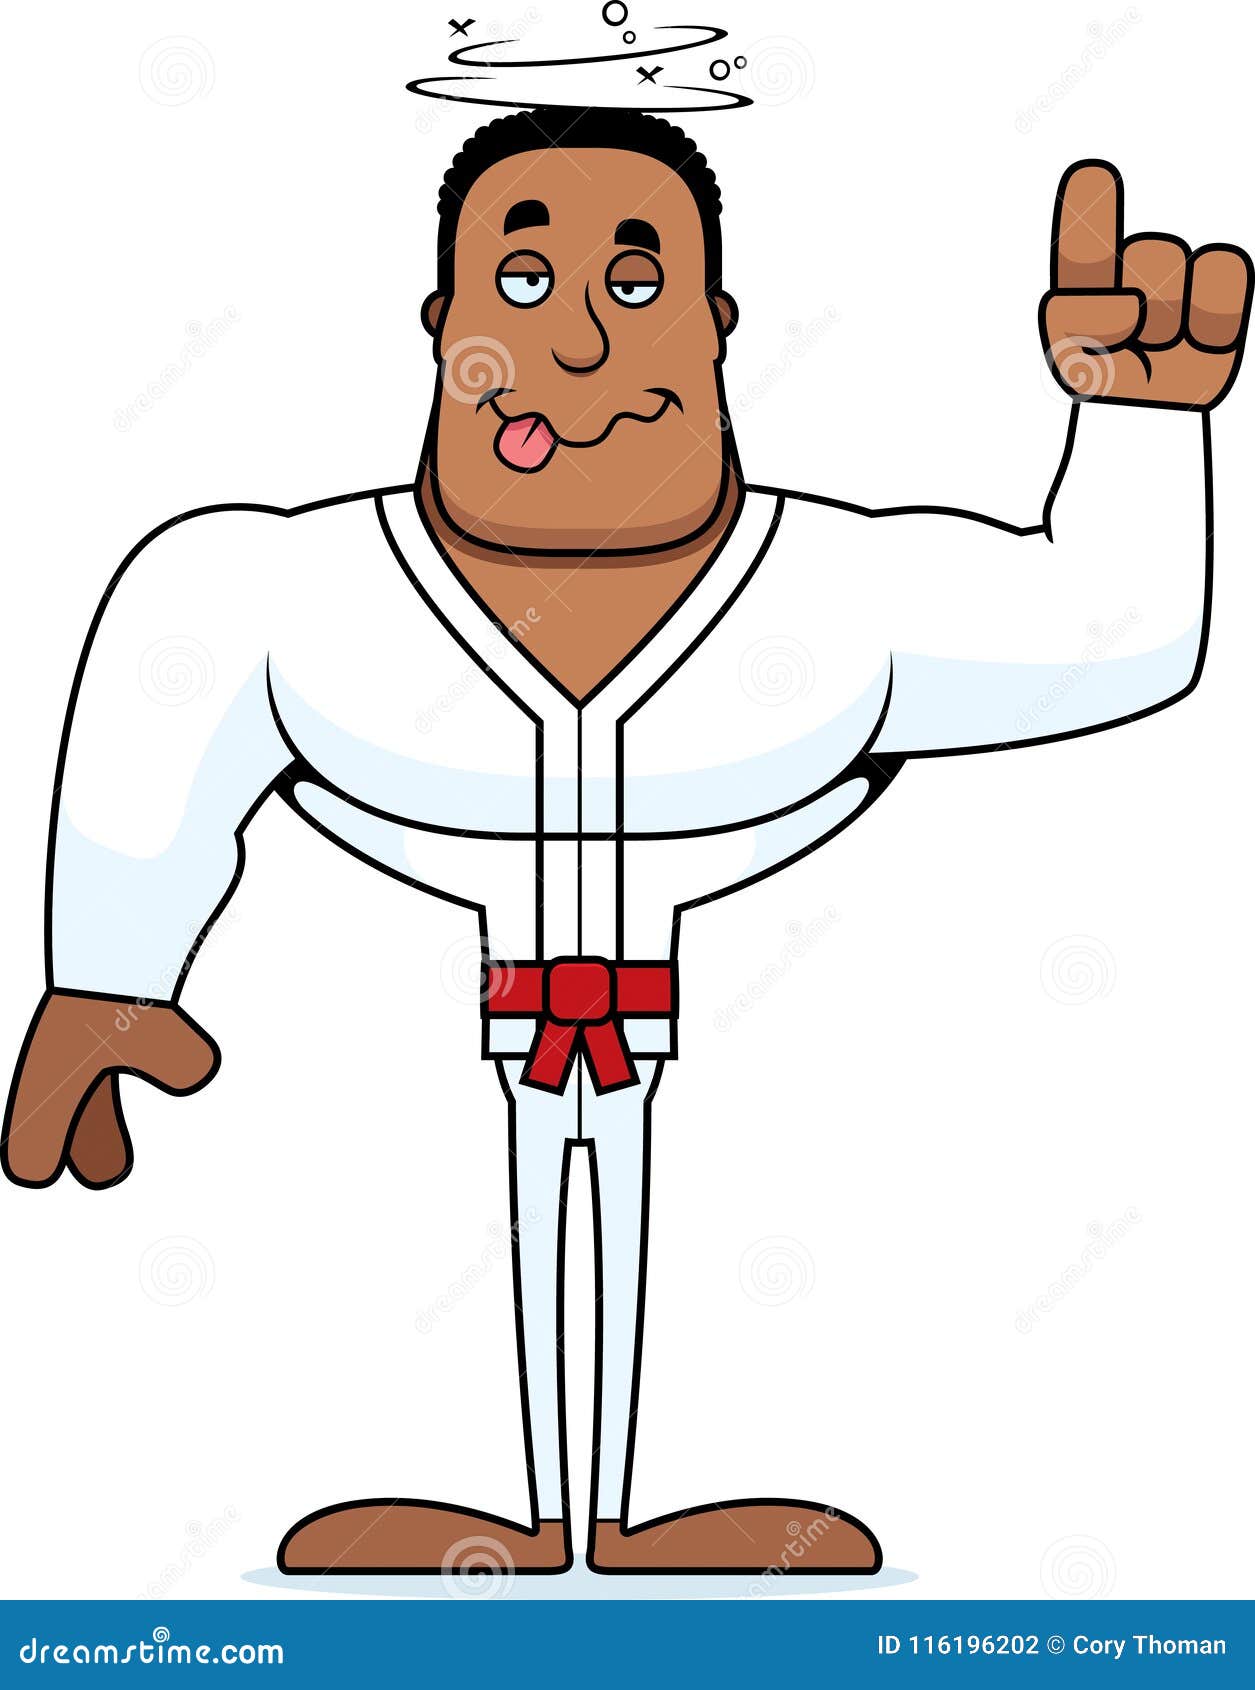 Cartoon Drunk Karate Man stock vector. Illustration of karate - 116196202